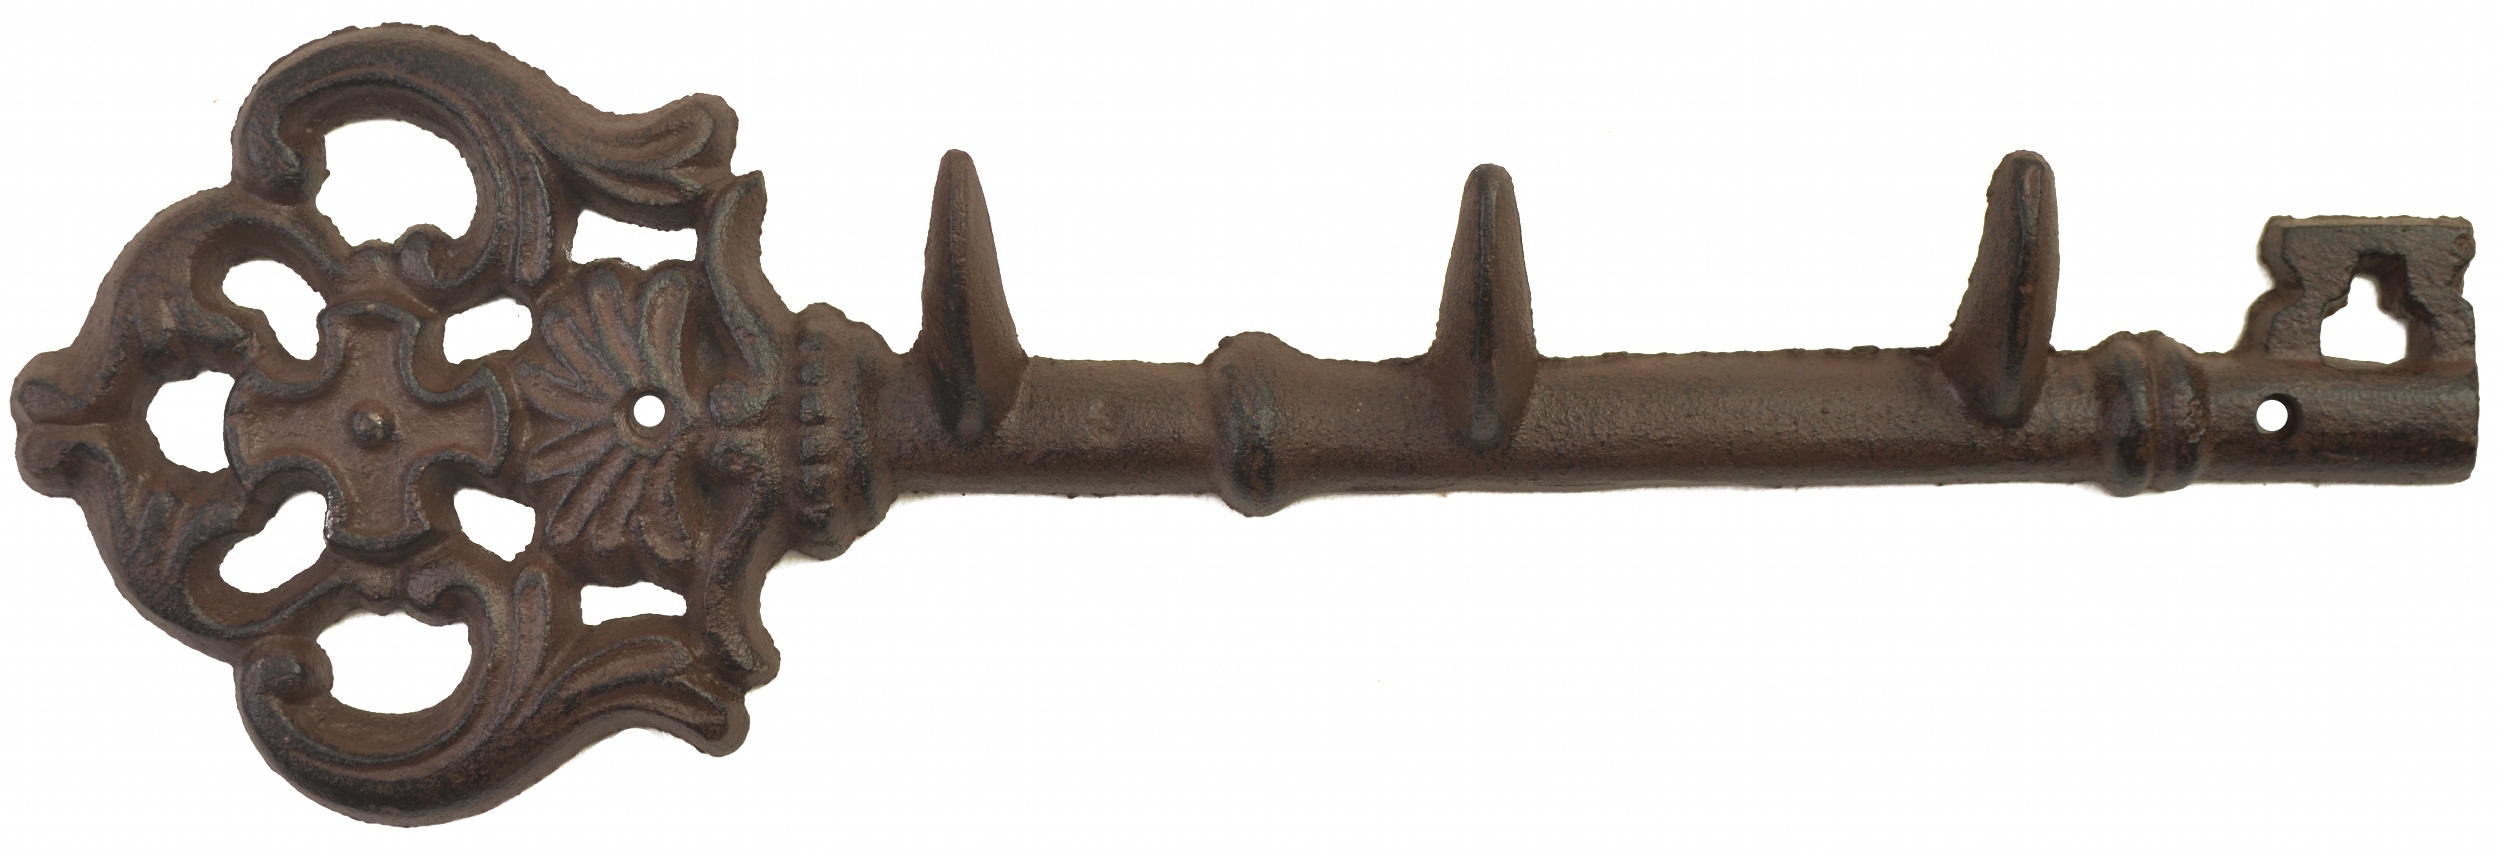 Cast Iron Wall Hook Rack - Antique Skeleton Key Style - 3 Hooks - 11.625 Long